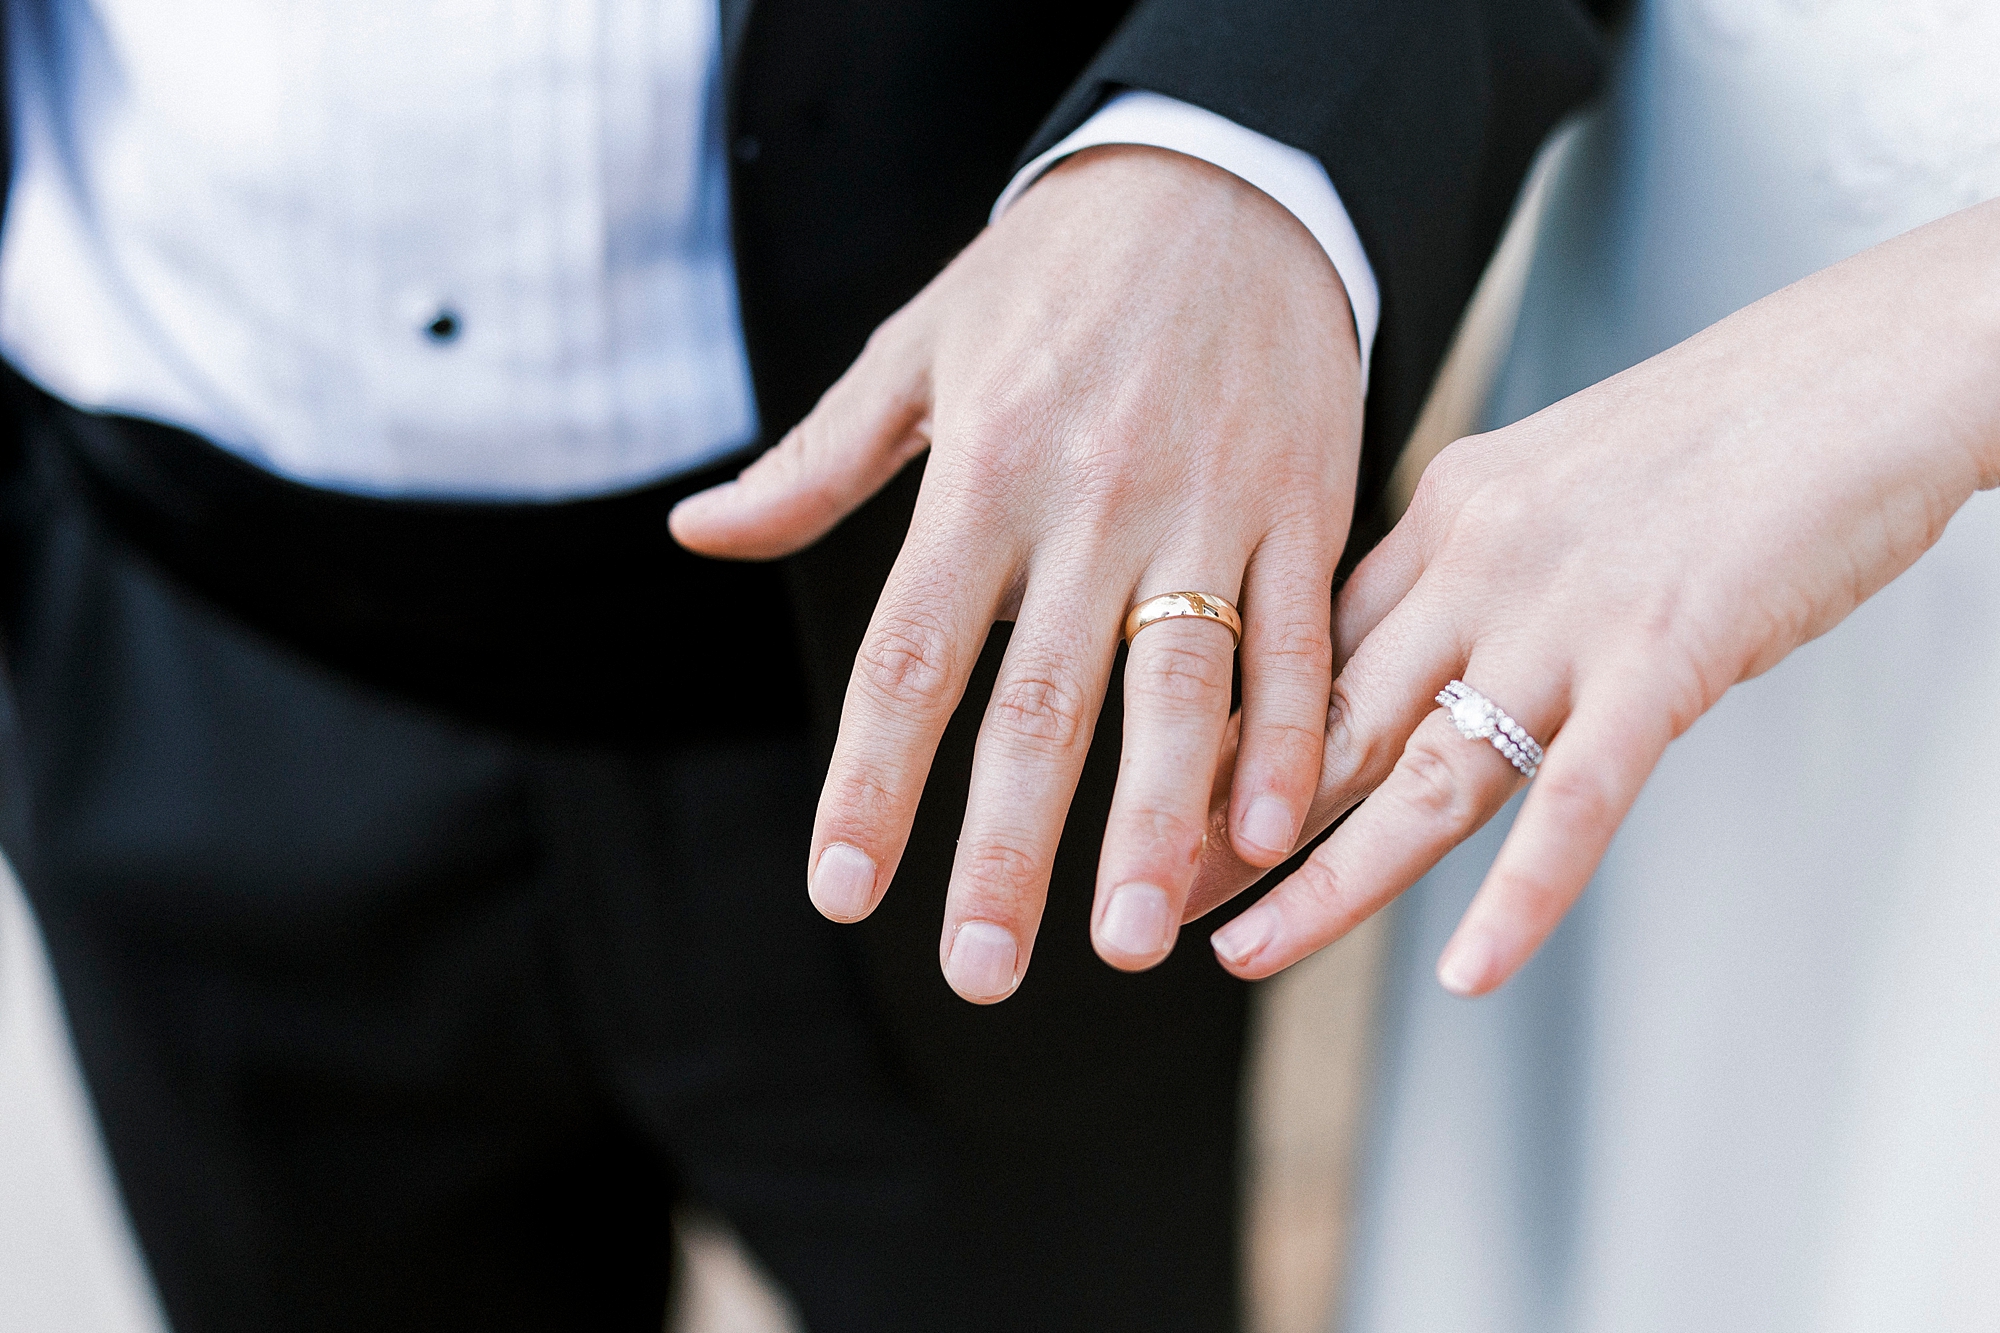 newlyweds show off wedding rings